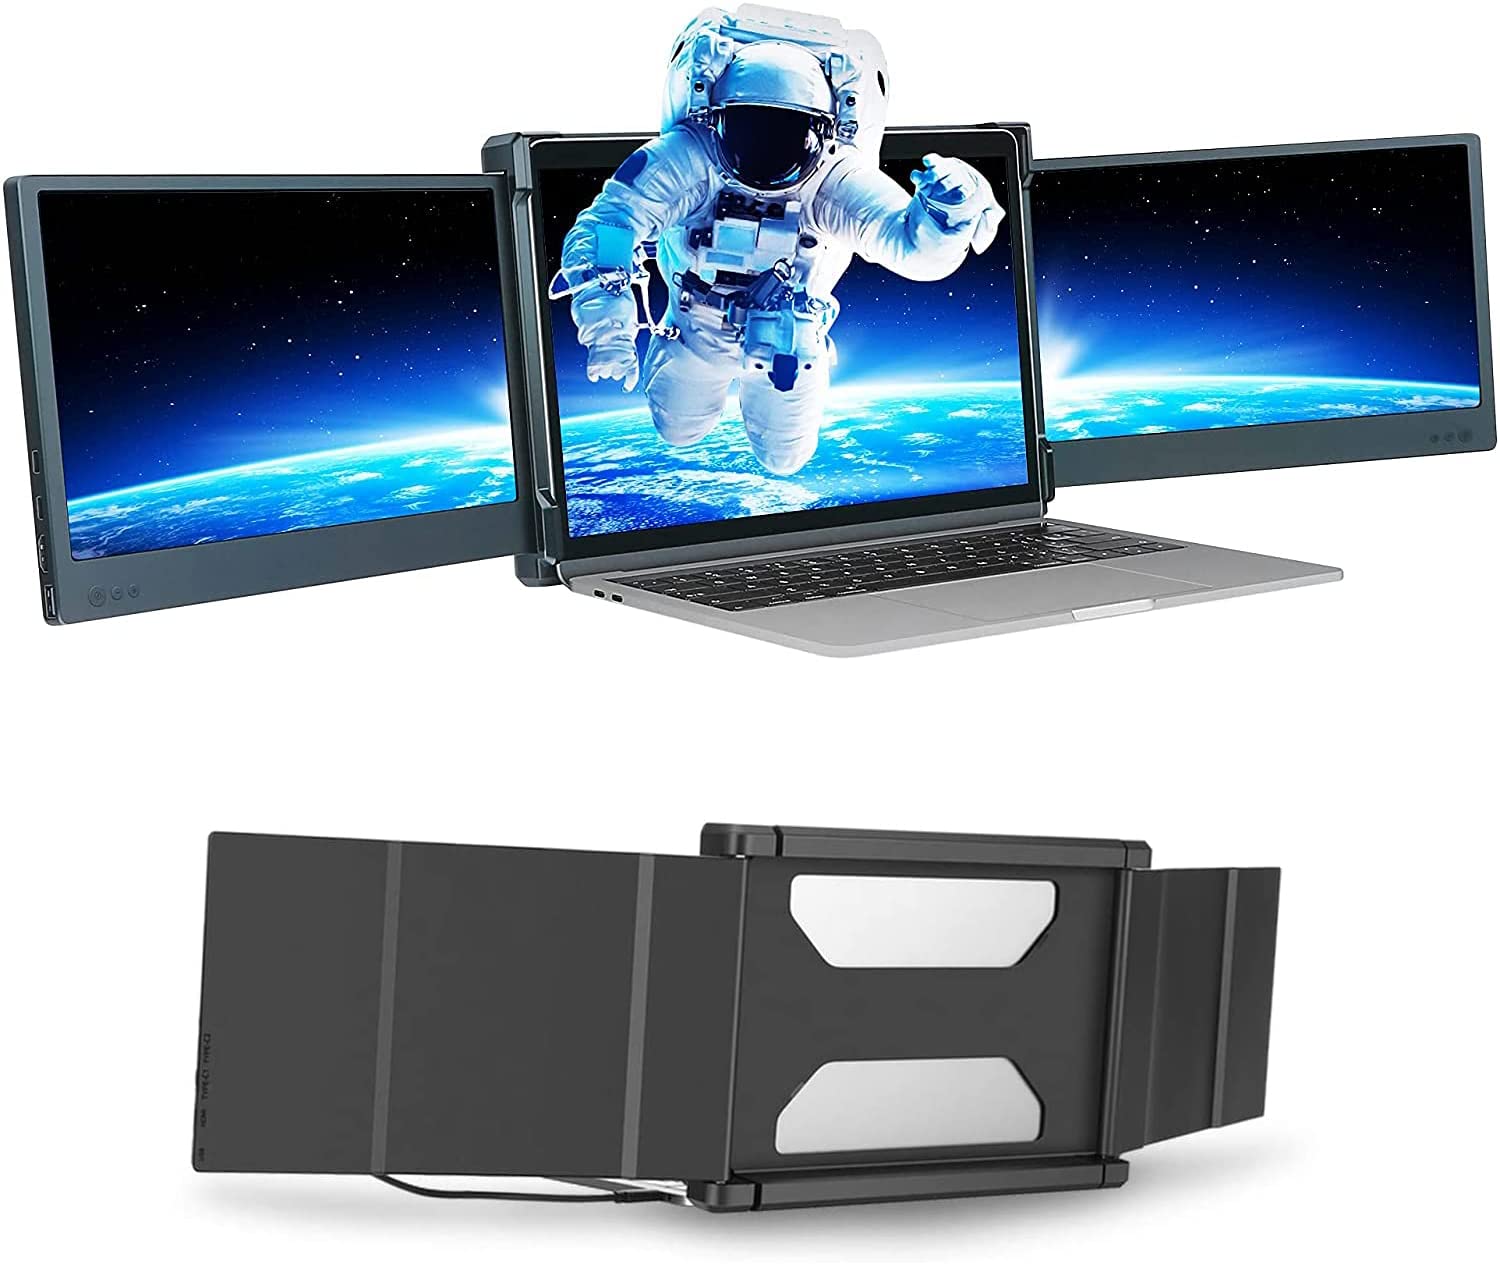 Tragbarer Monitor für Laptop, 12' Full HD 1080p IPS Display, Dual Triple Monitor Screen Extender, Kompatibel mit 13'-16' Mac Windows Chrome Laptops